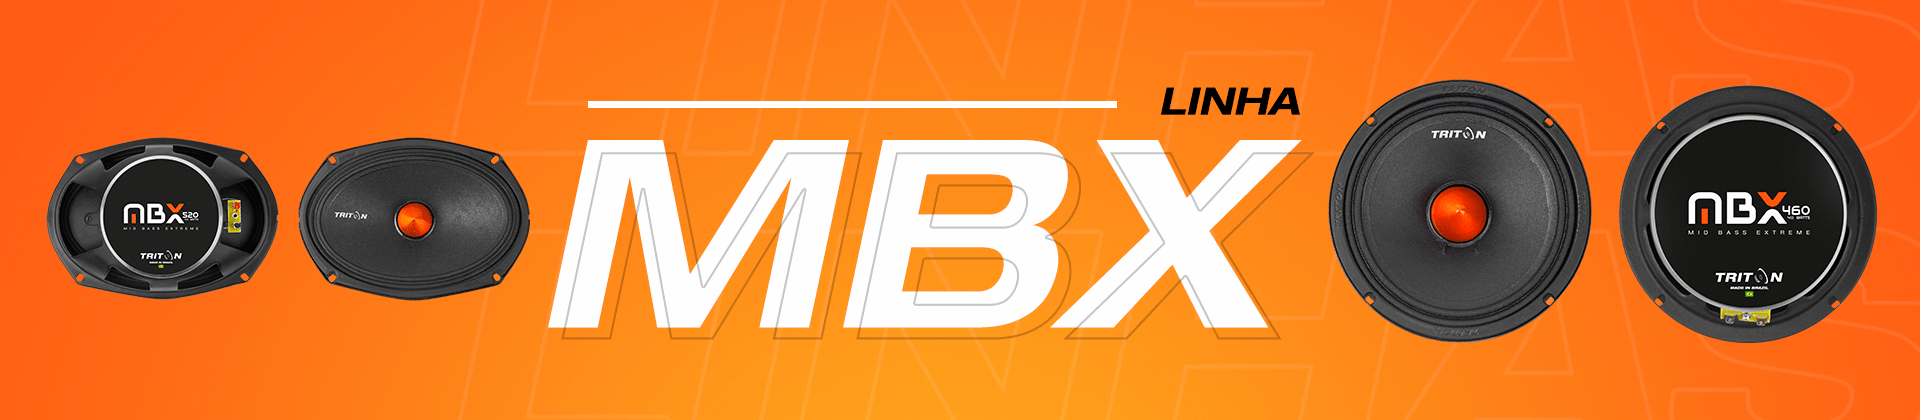 Banner da linha MBX